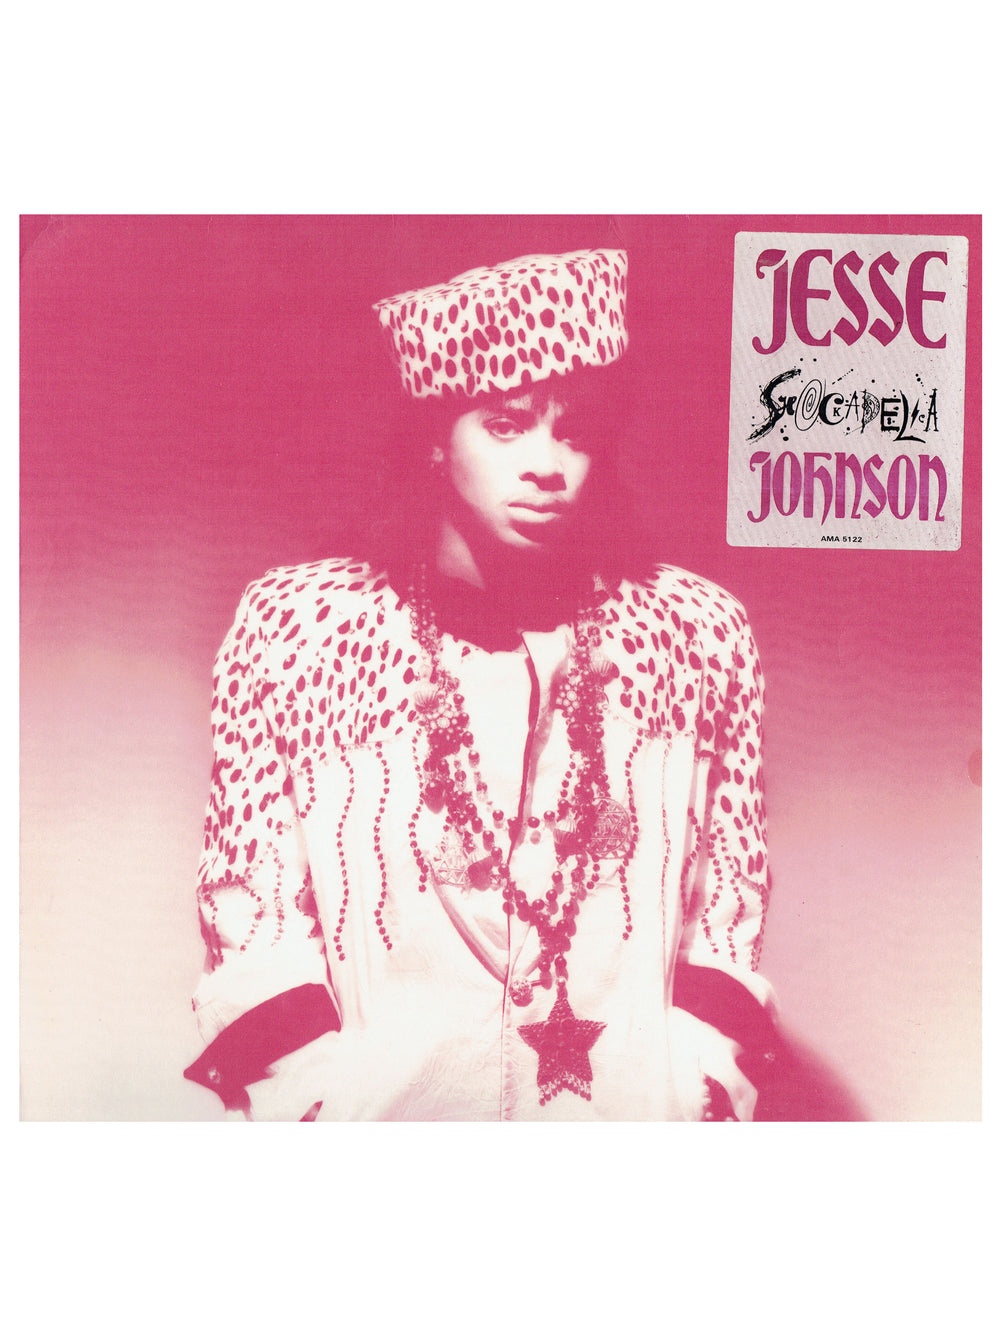 Prince - Jesse Johnson Shockadelica Vinyl LP UK Preloved & Play Tested : EX 1986